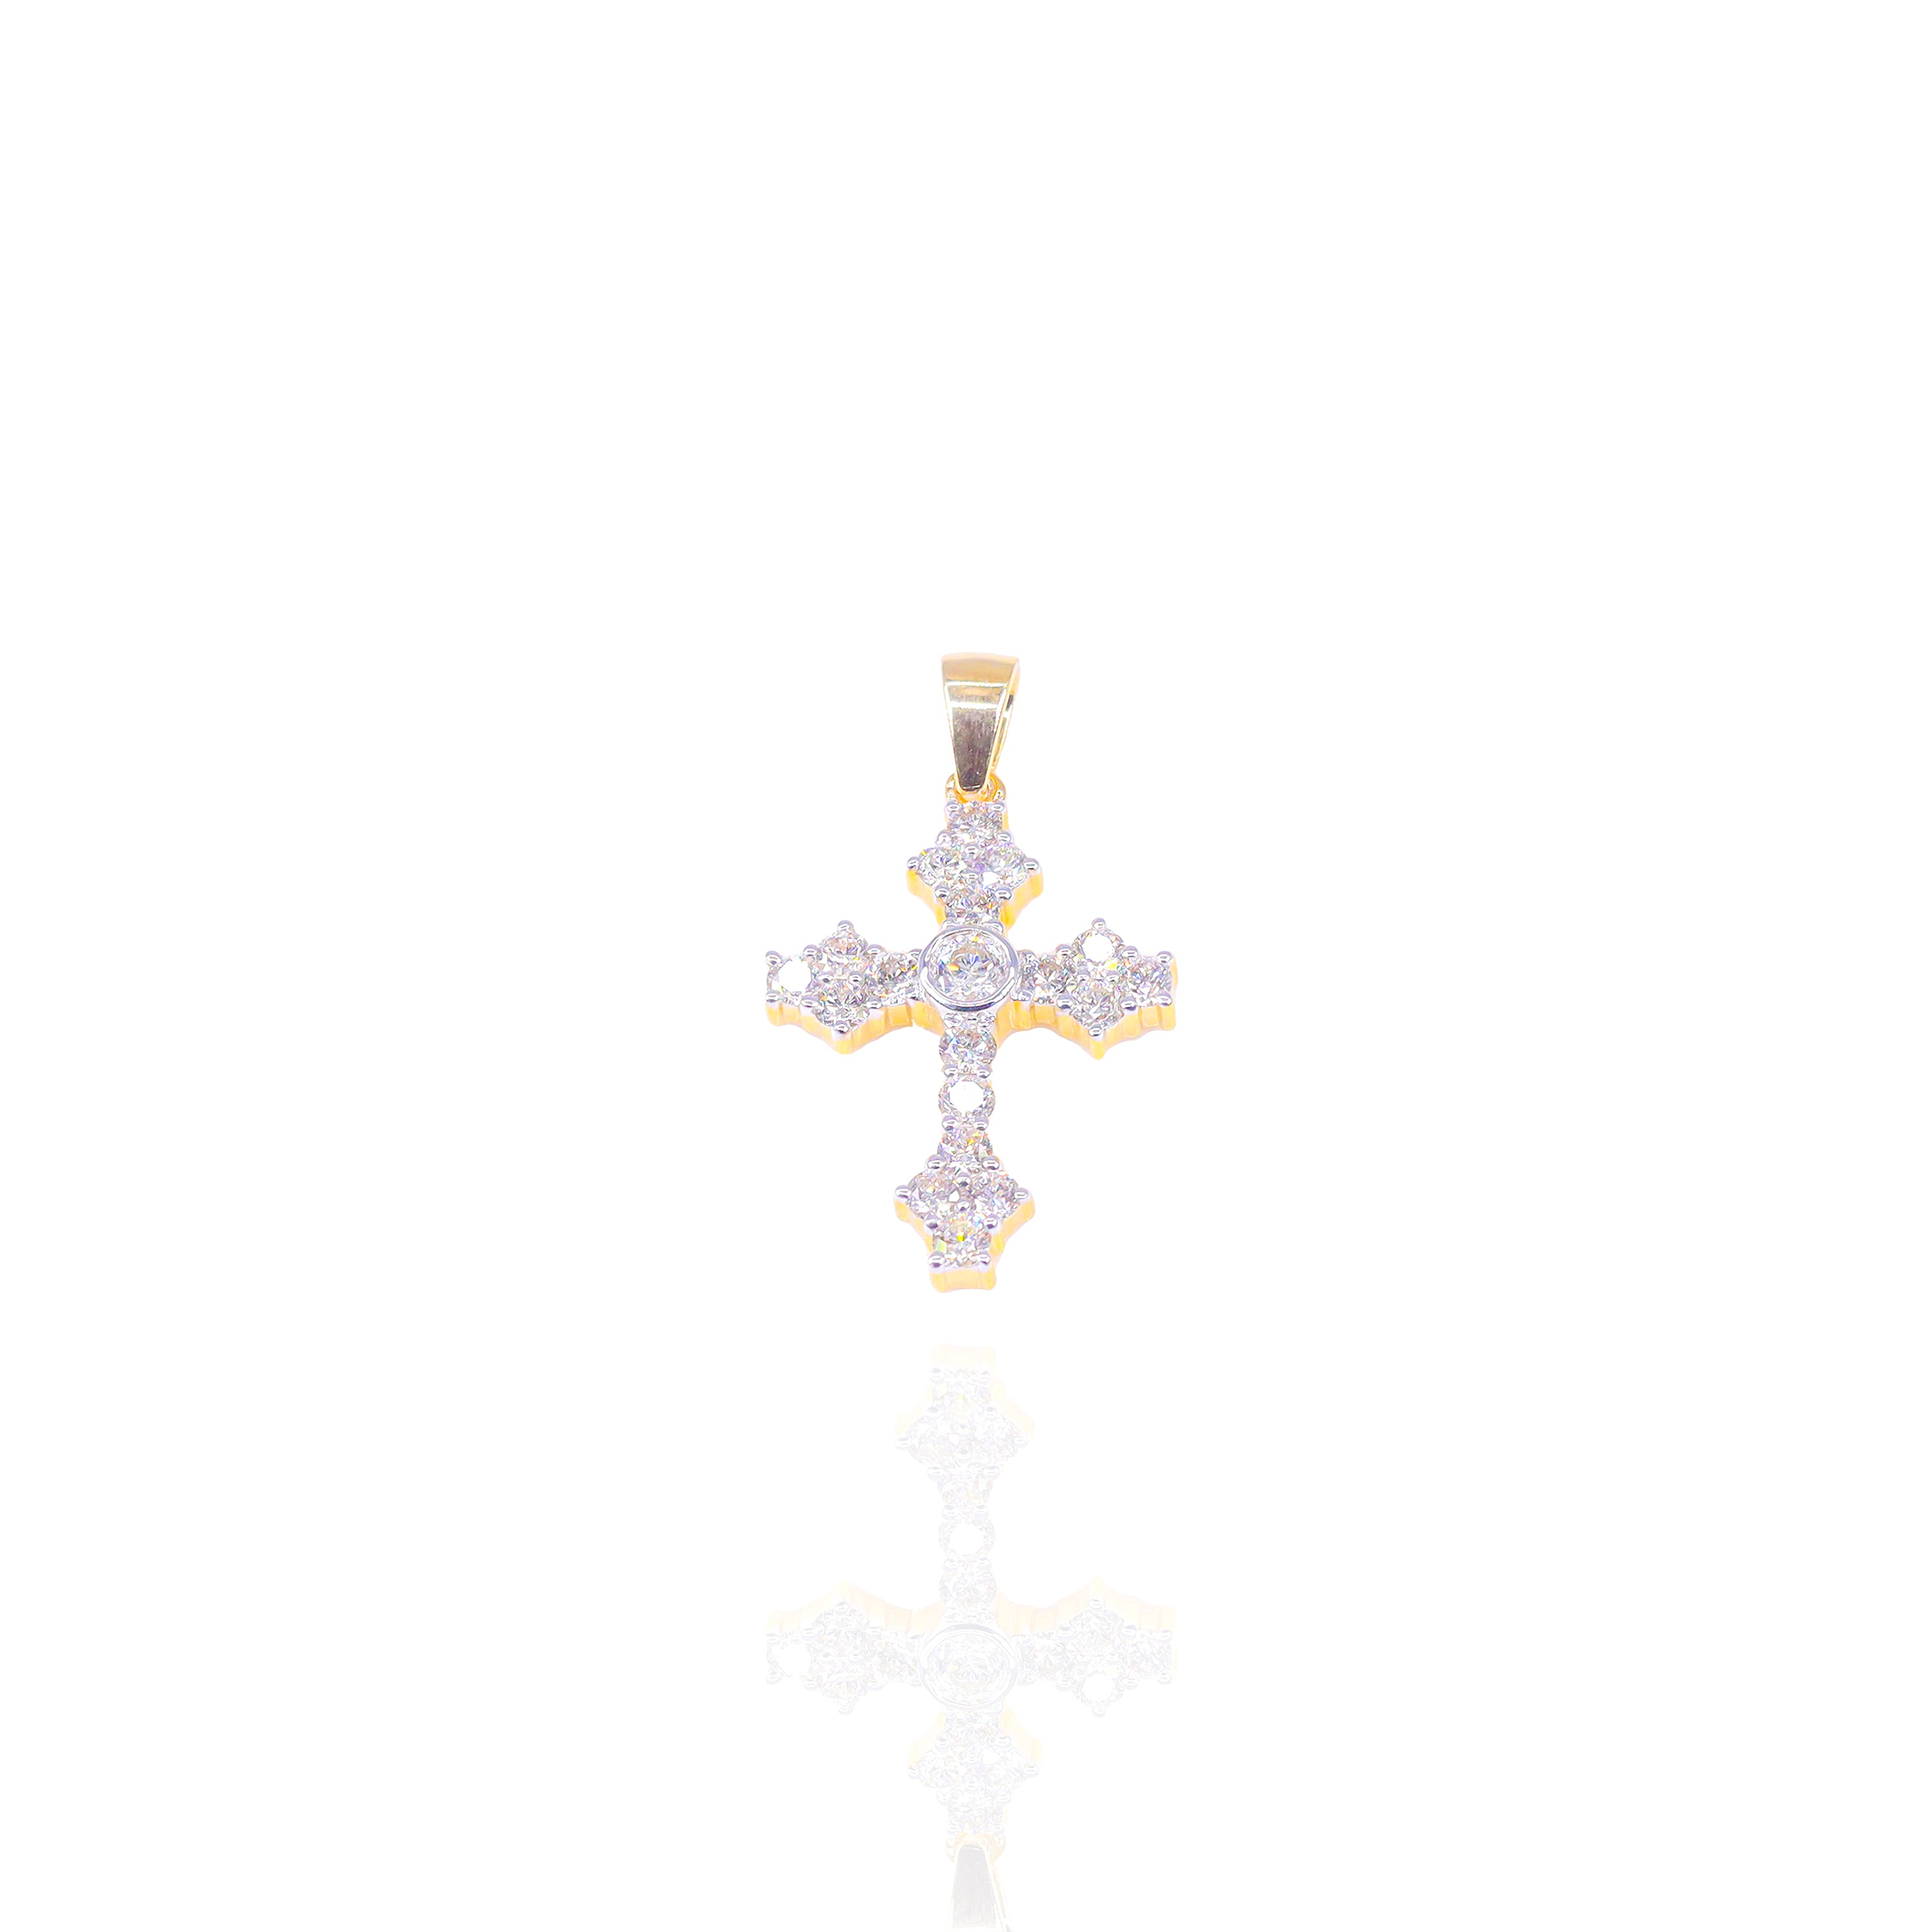 Small Cross with Center Stone Diamond Pendant